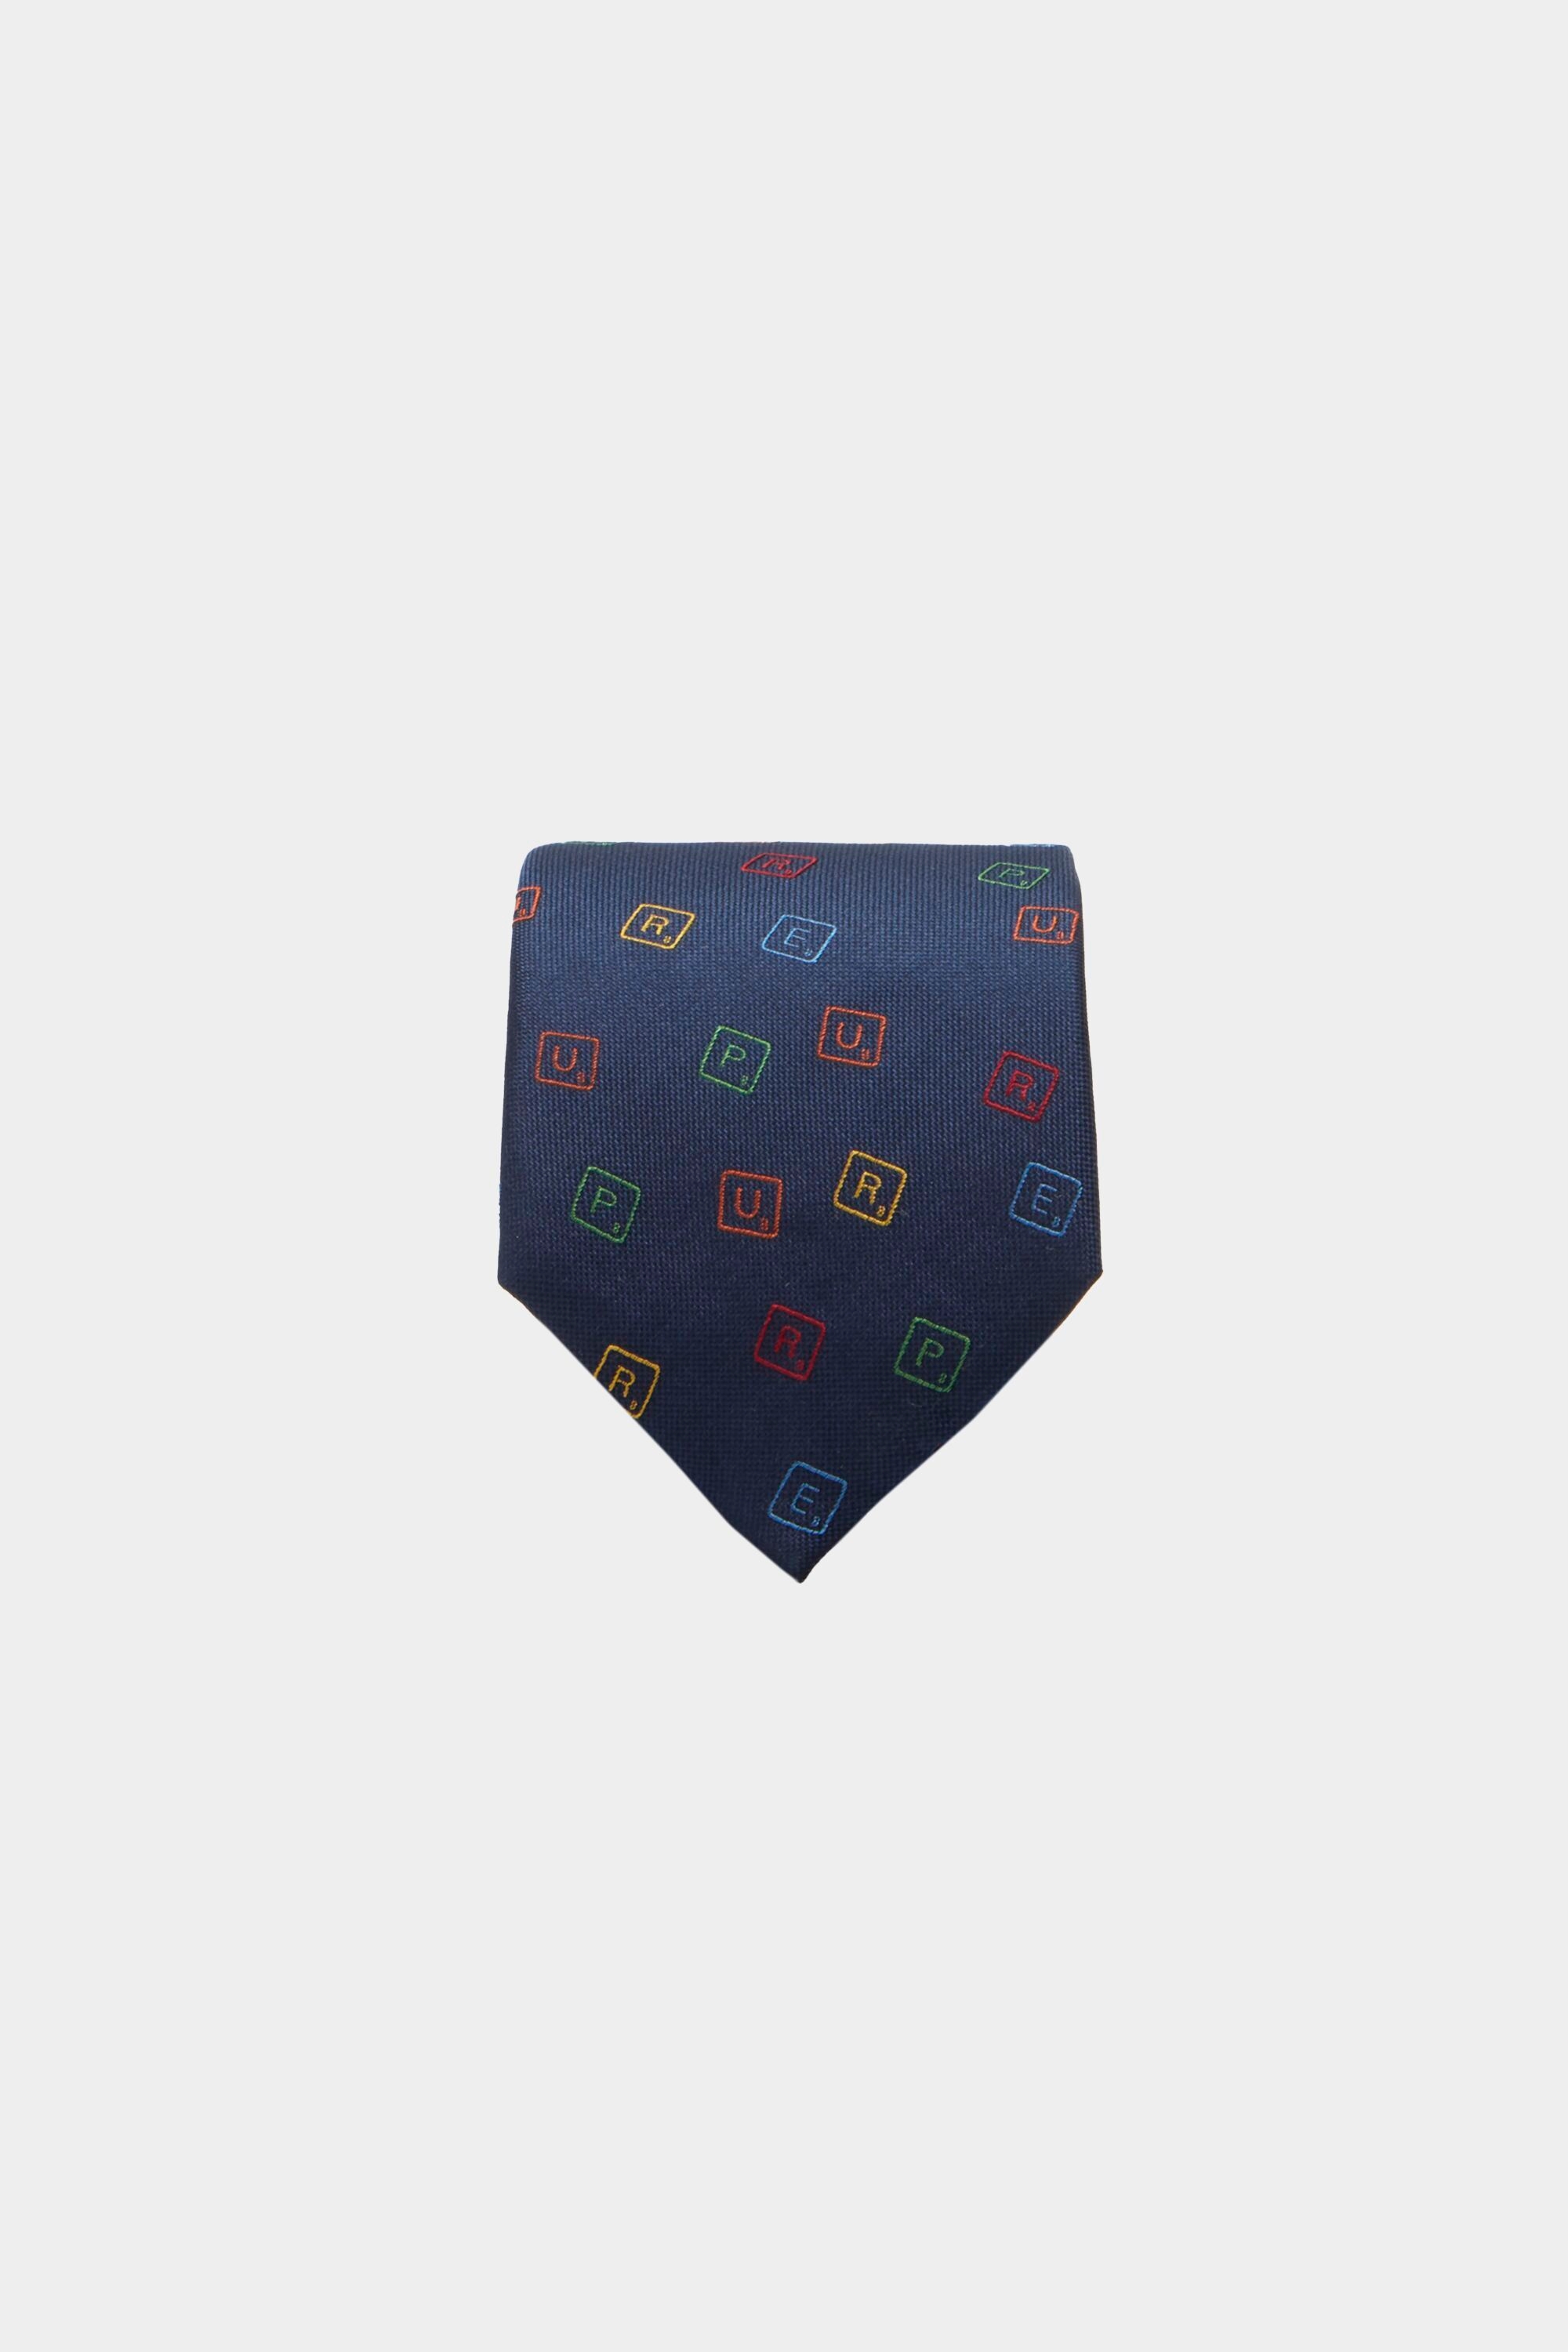 Scrabble silk tie